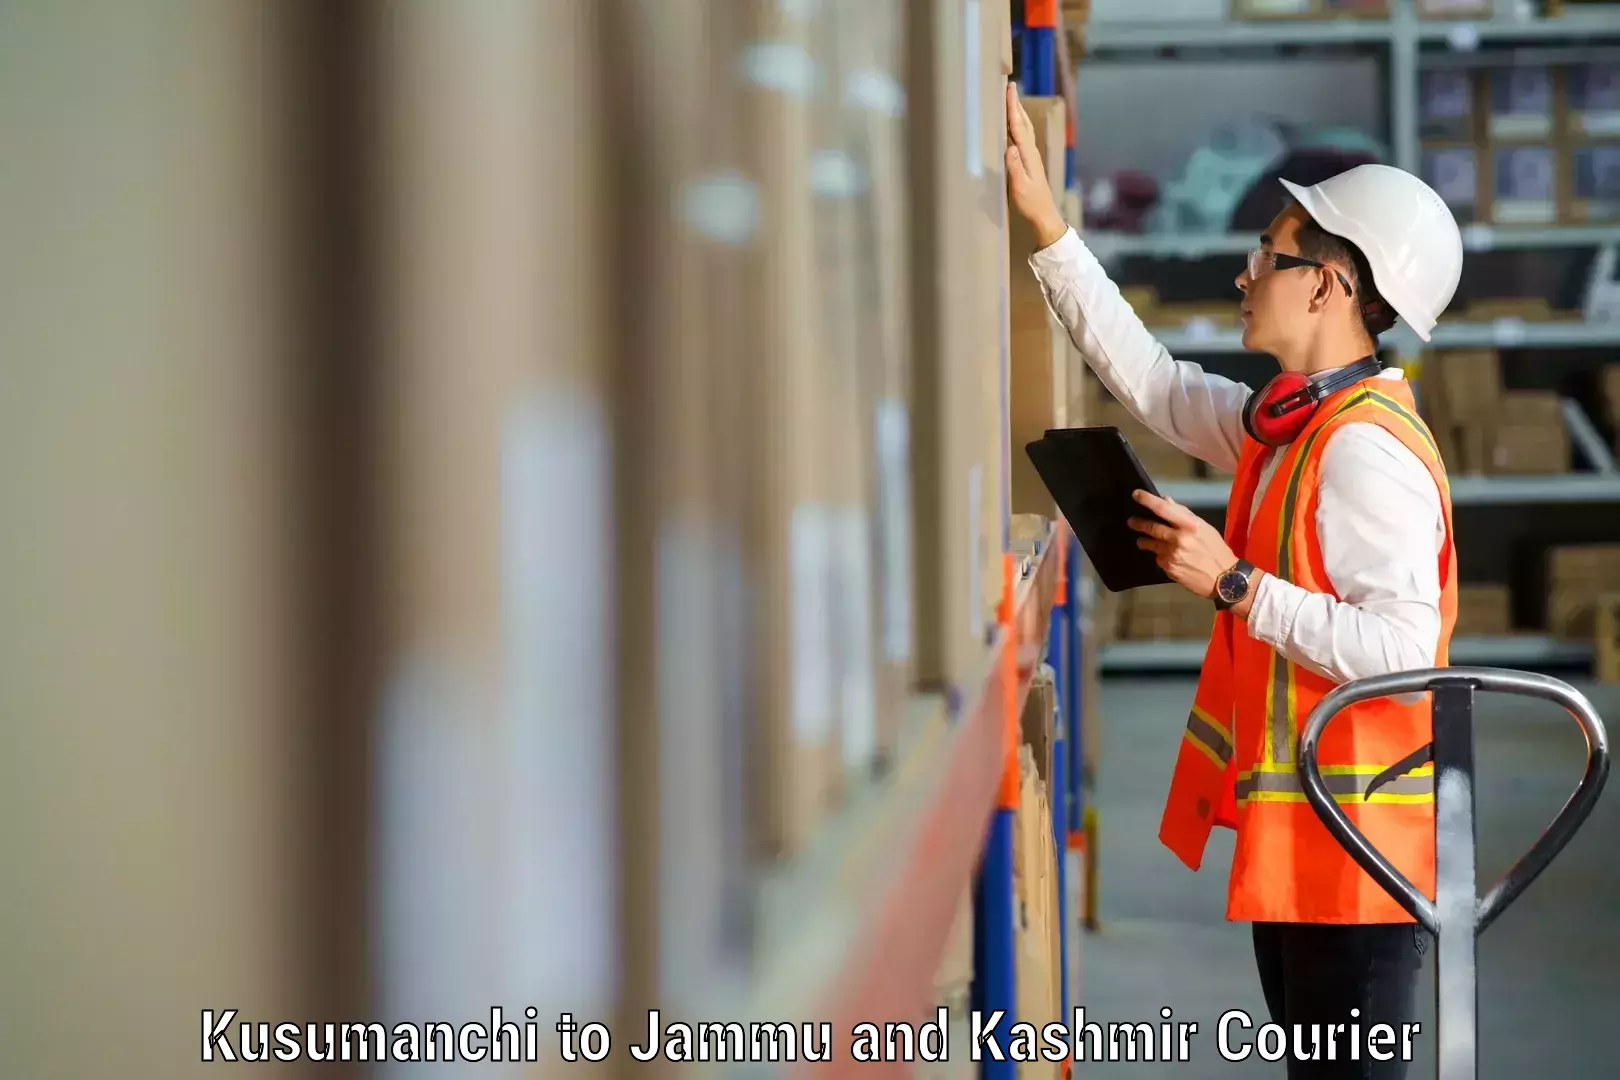 Furniture transport experts Kusumanchi to University of Jammu